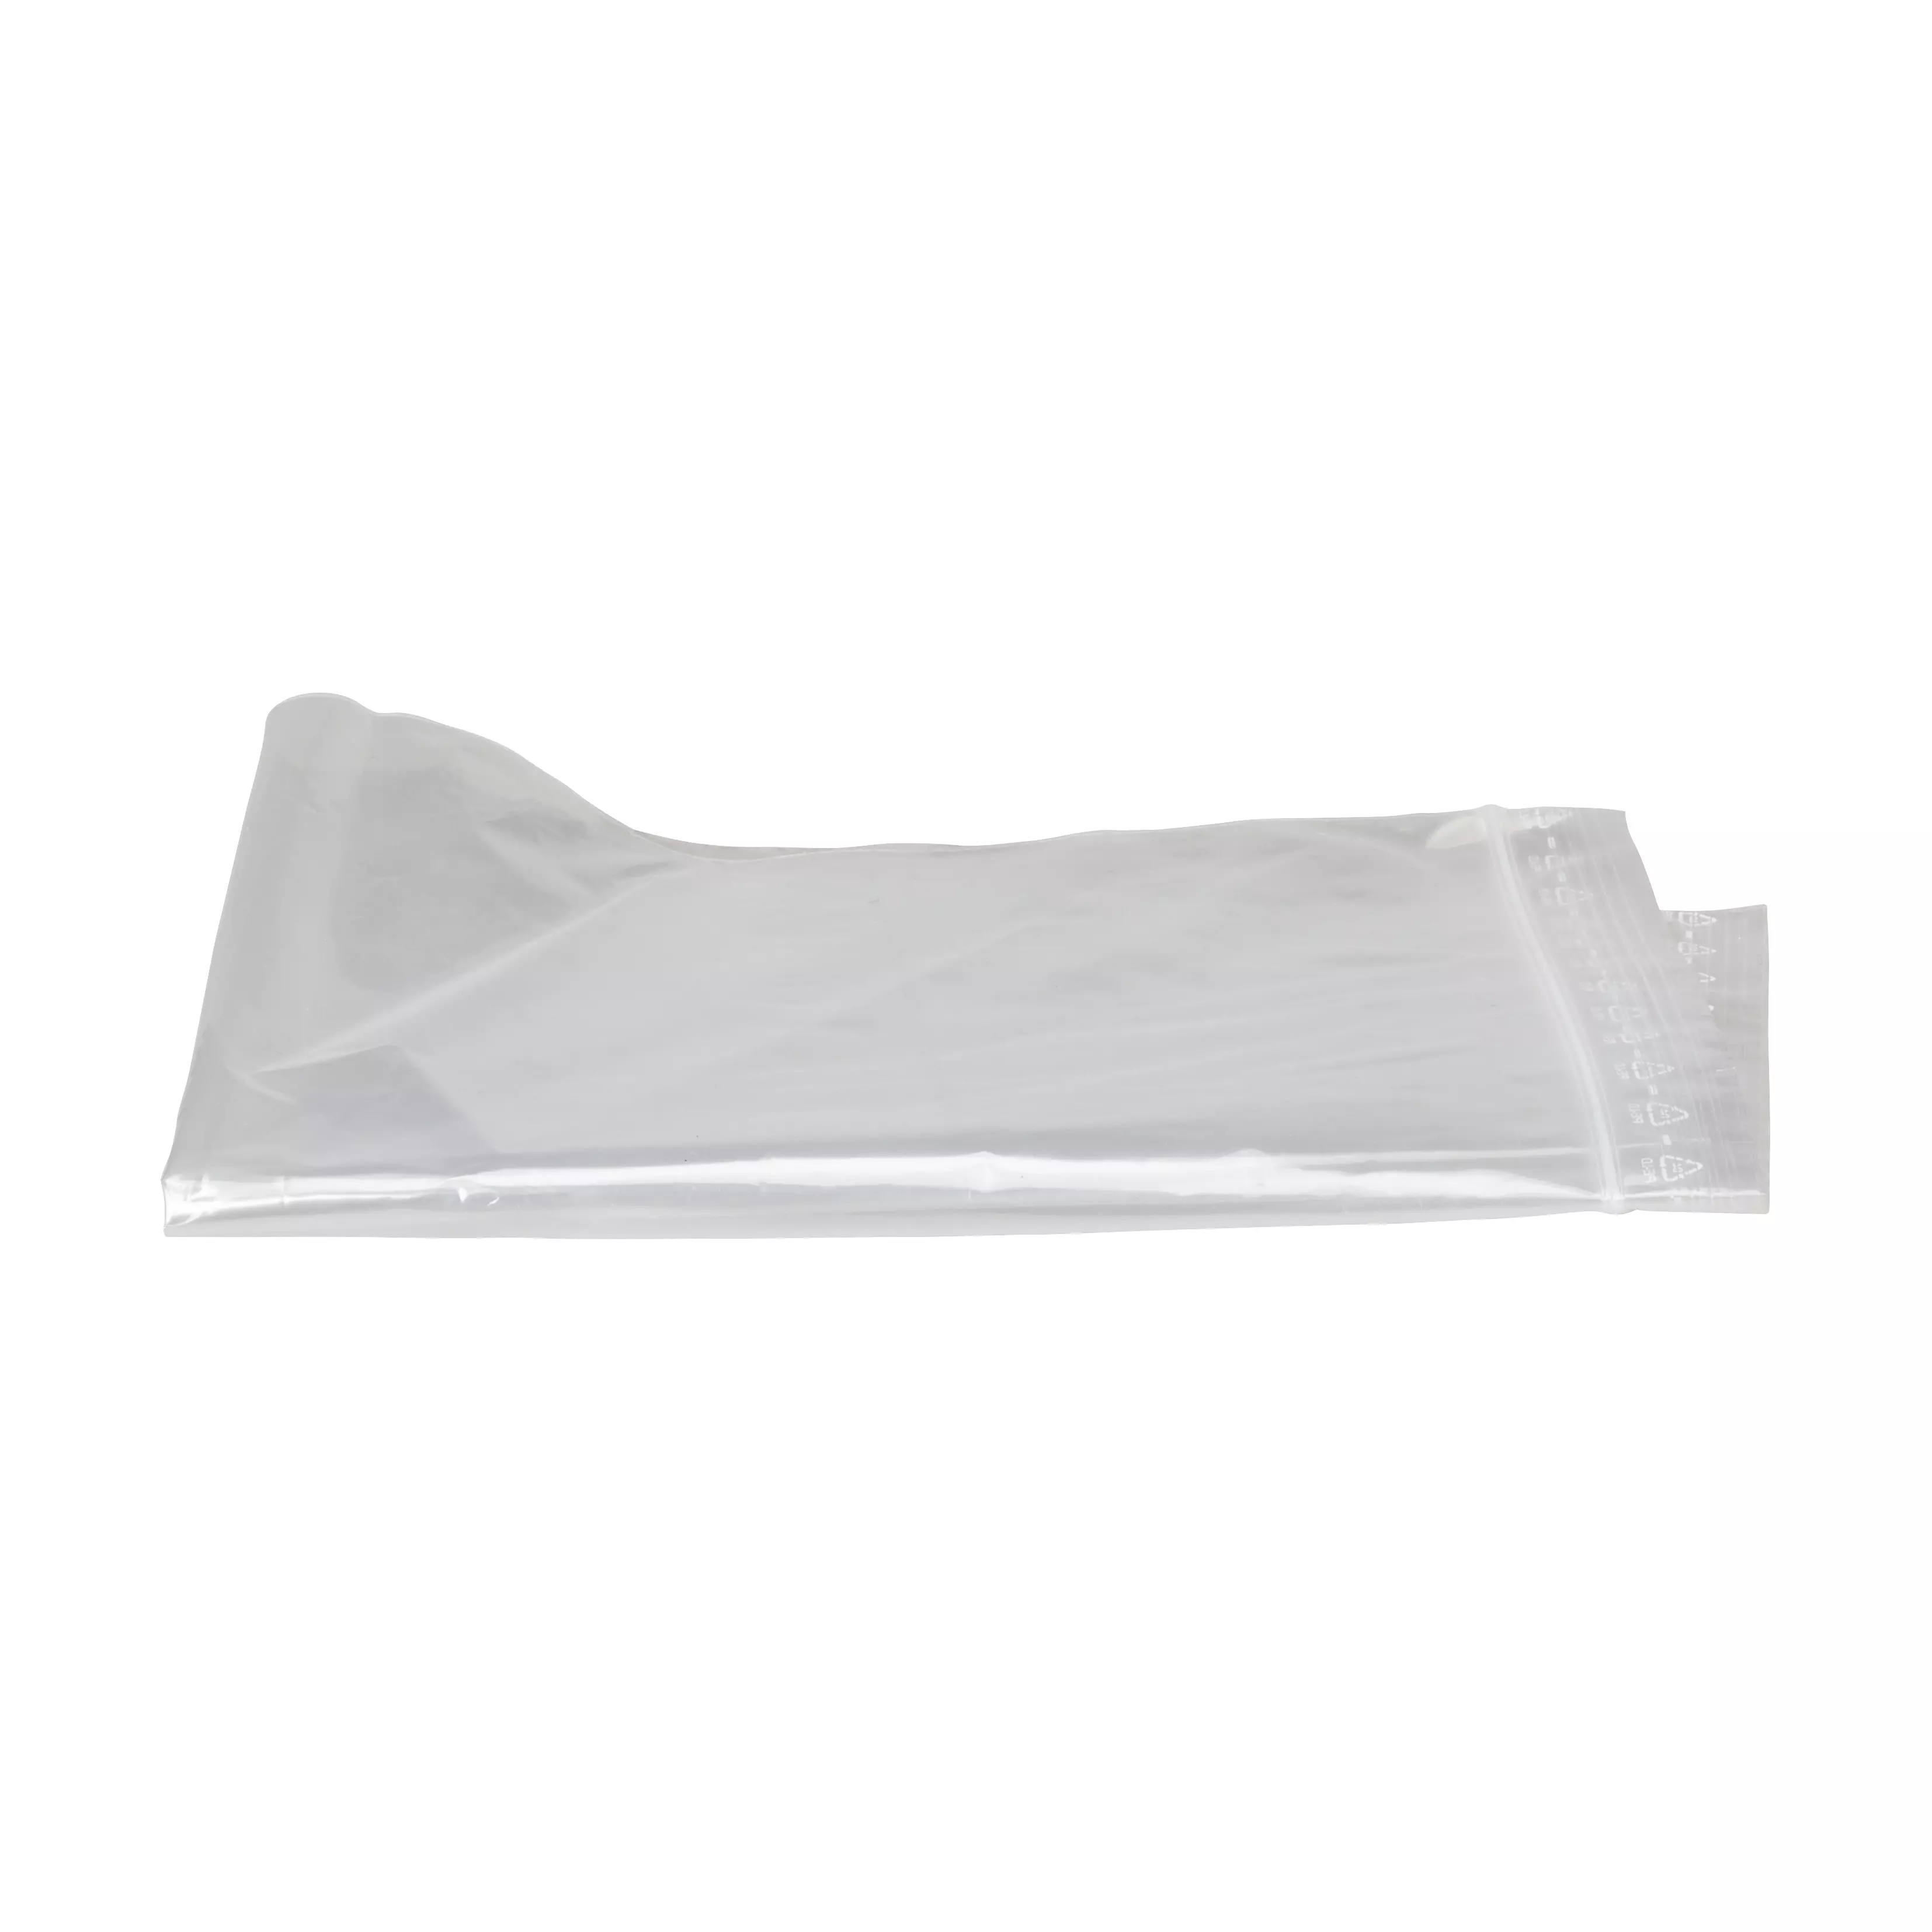 Foil bag with pressure seal for DIN 13157 / 13169